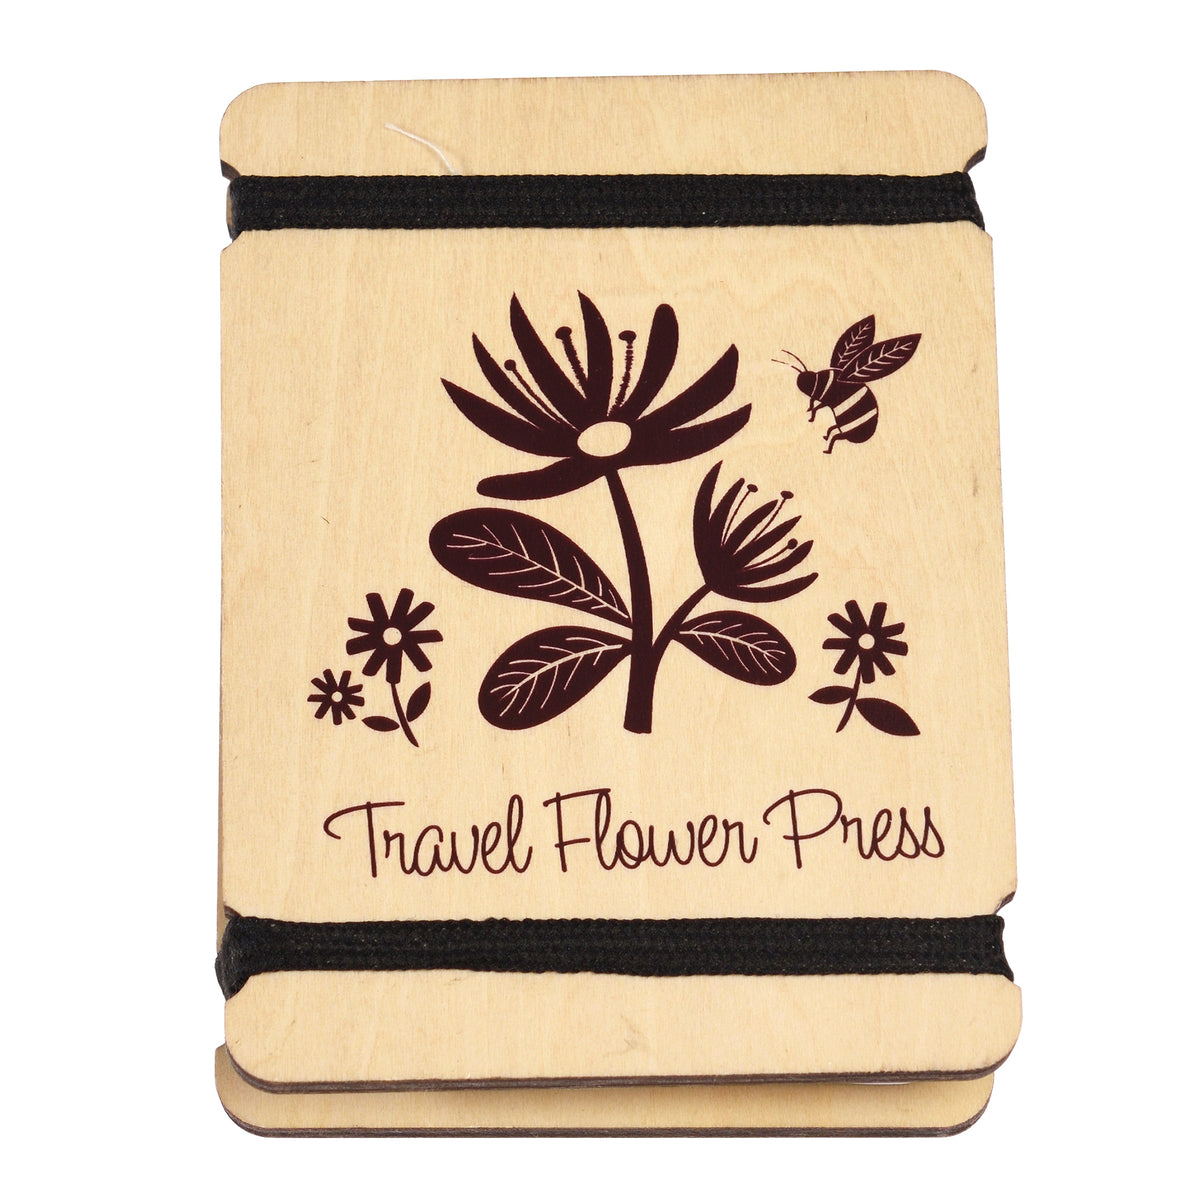 Travel flower press - Wonders of Nature